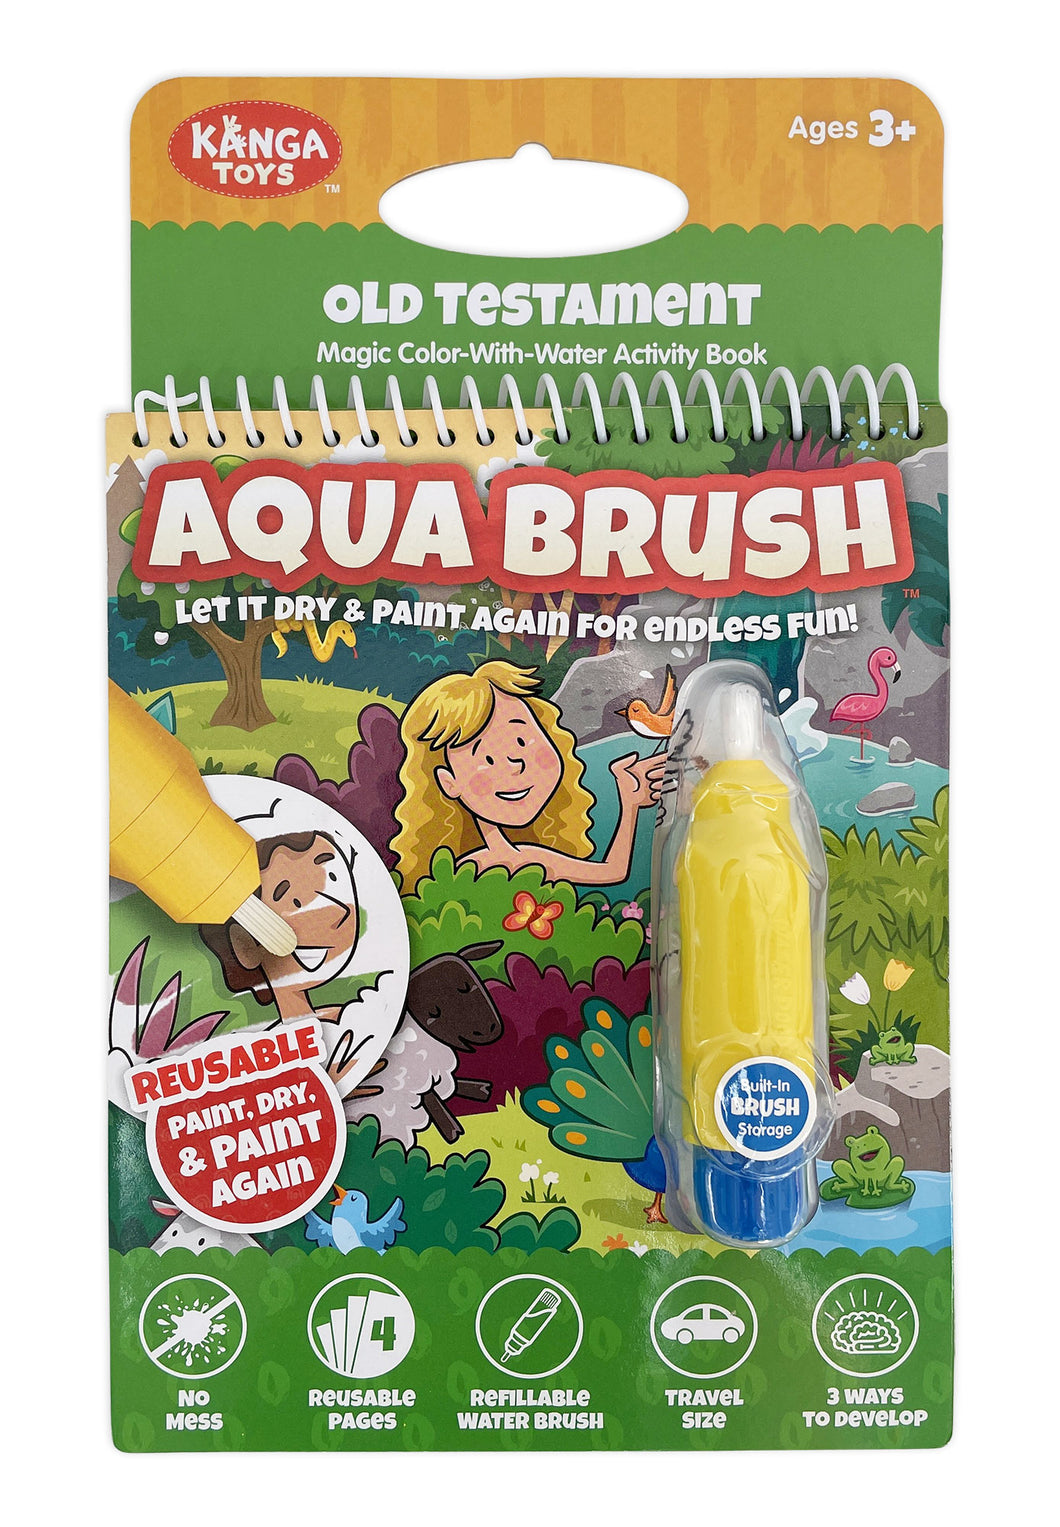 Old Testament #1 Aqua Brush Activity Book, Reusable Travel Activity